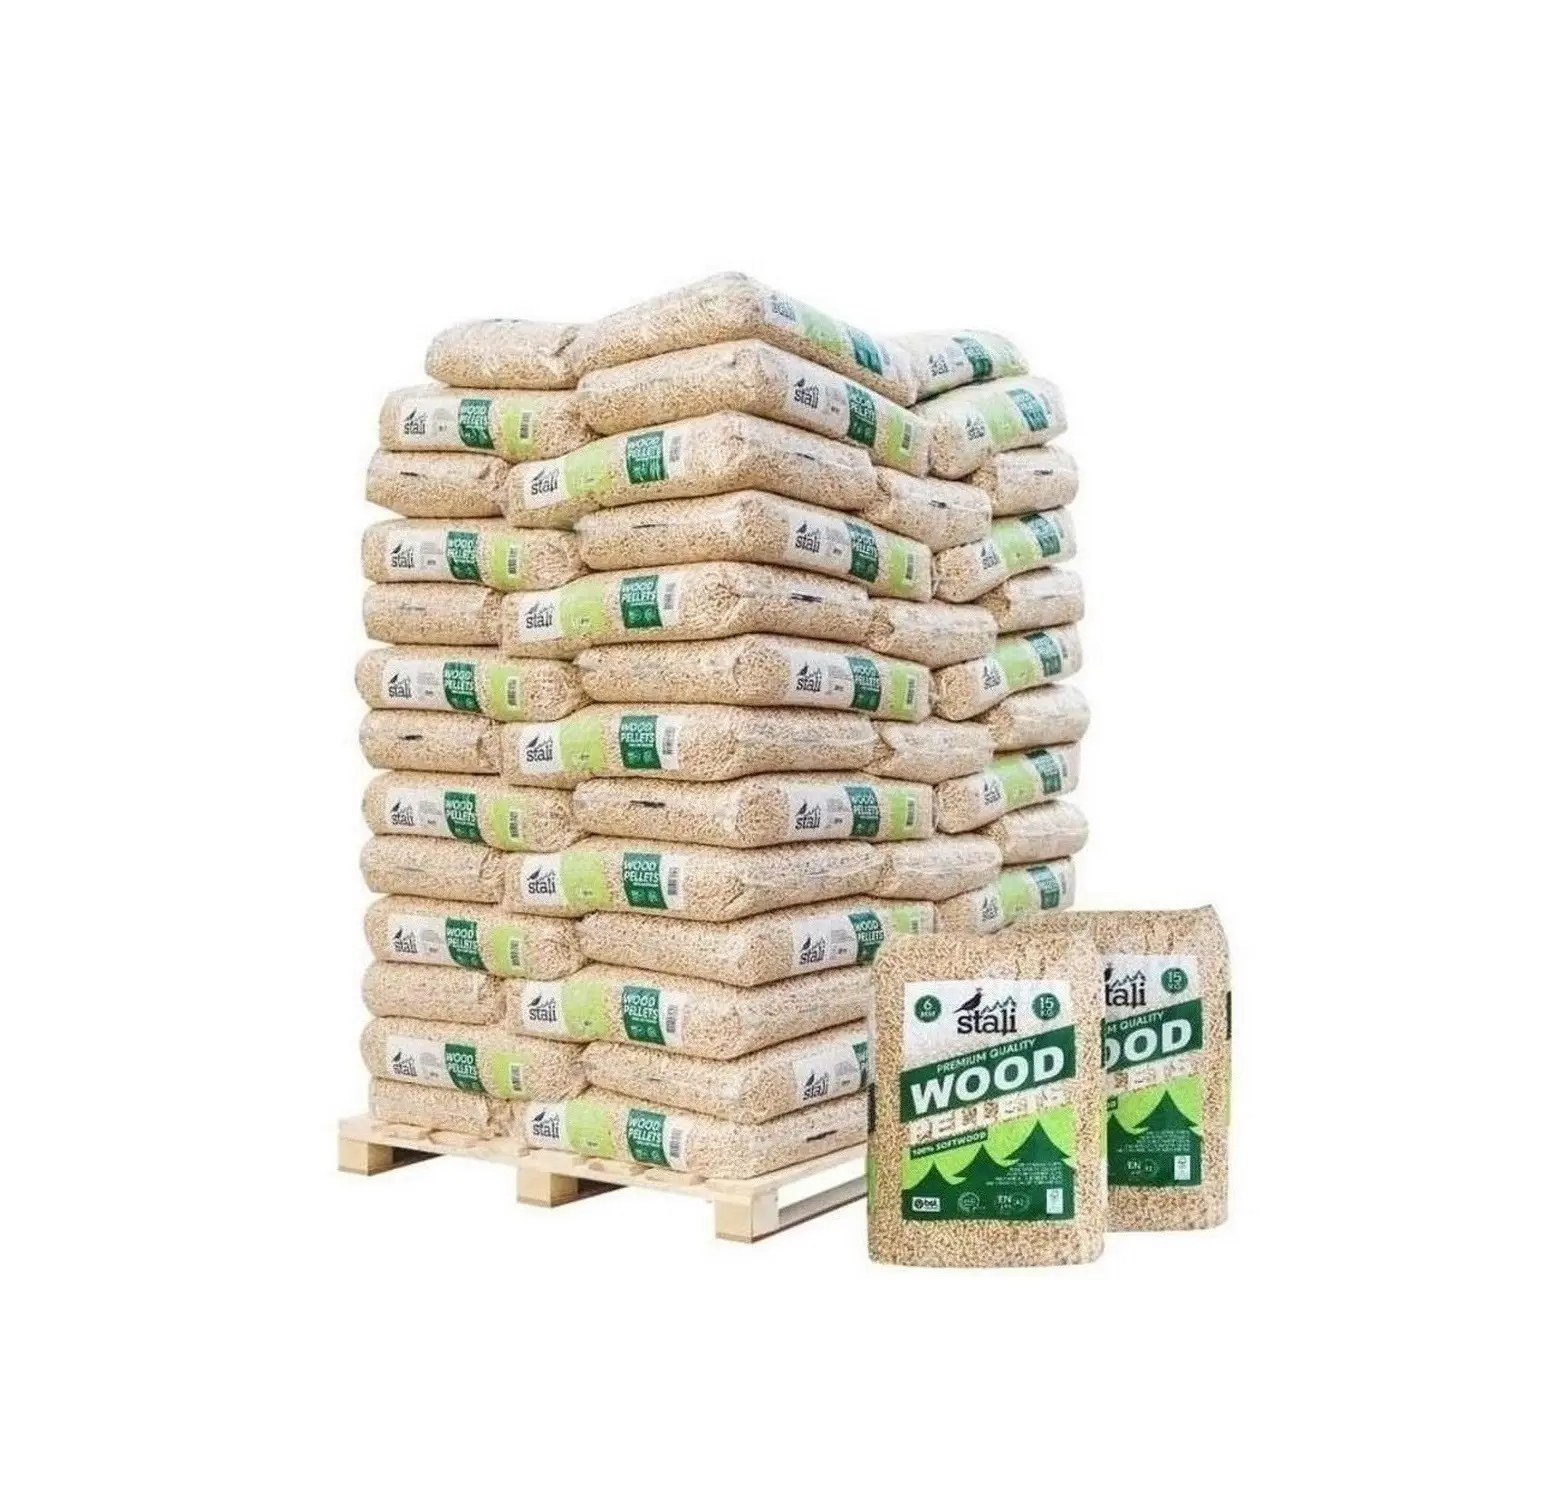 Wood Pellet,DIN Plus,EN Plus-A1(6-8mm)Pine,Beech,Spruce,Fir,Acacia & Oak in 15kg bag BSL premium quality Biomass Heating fuel